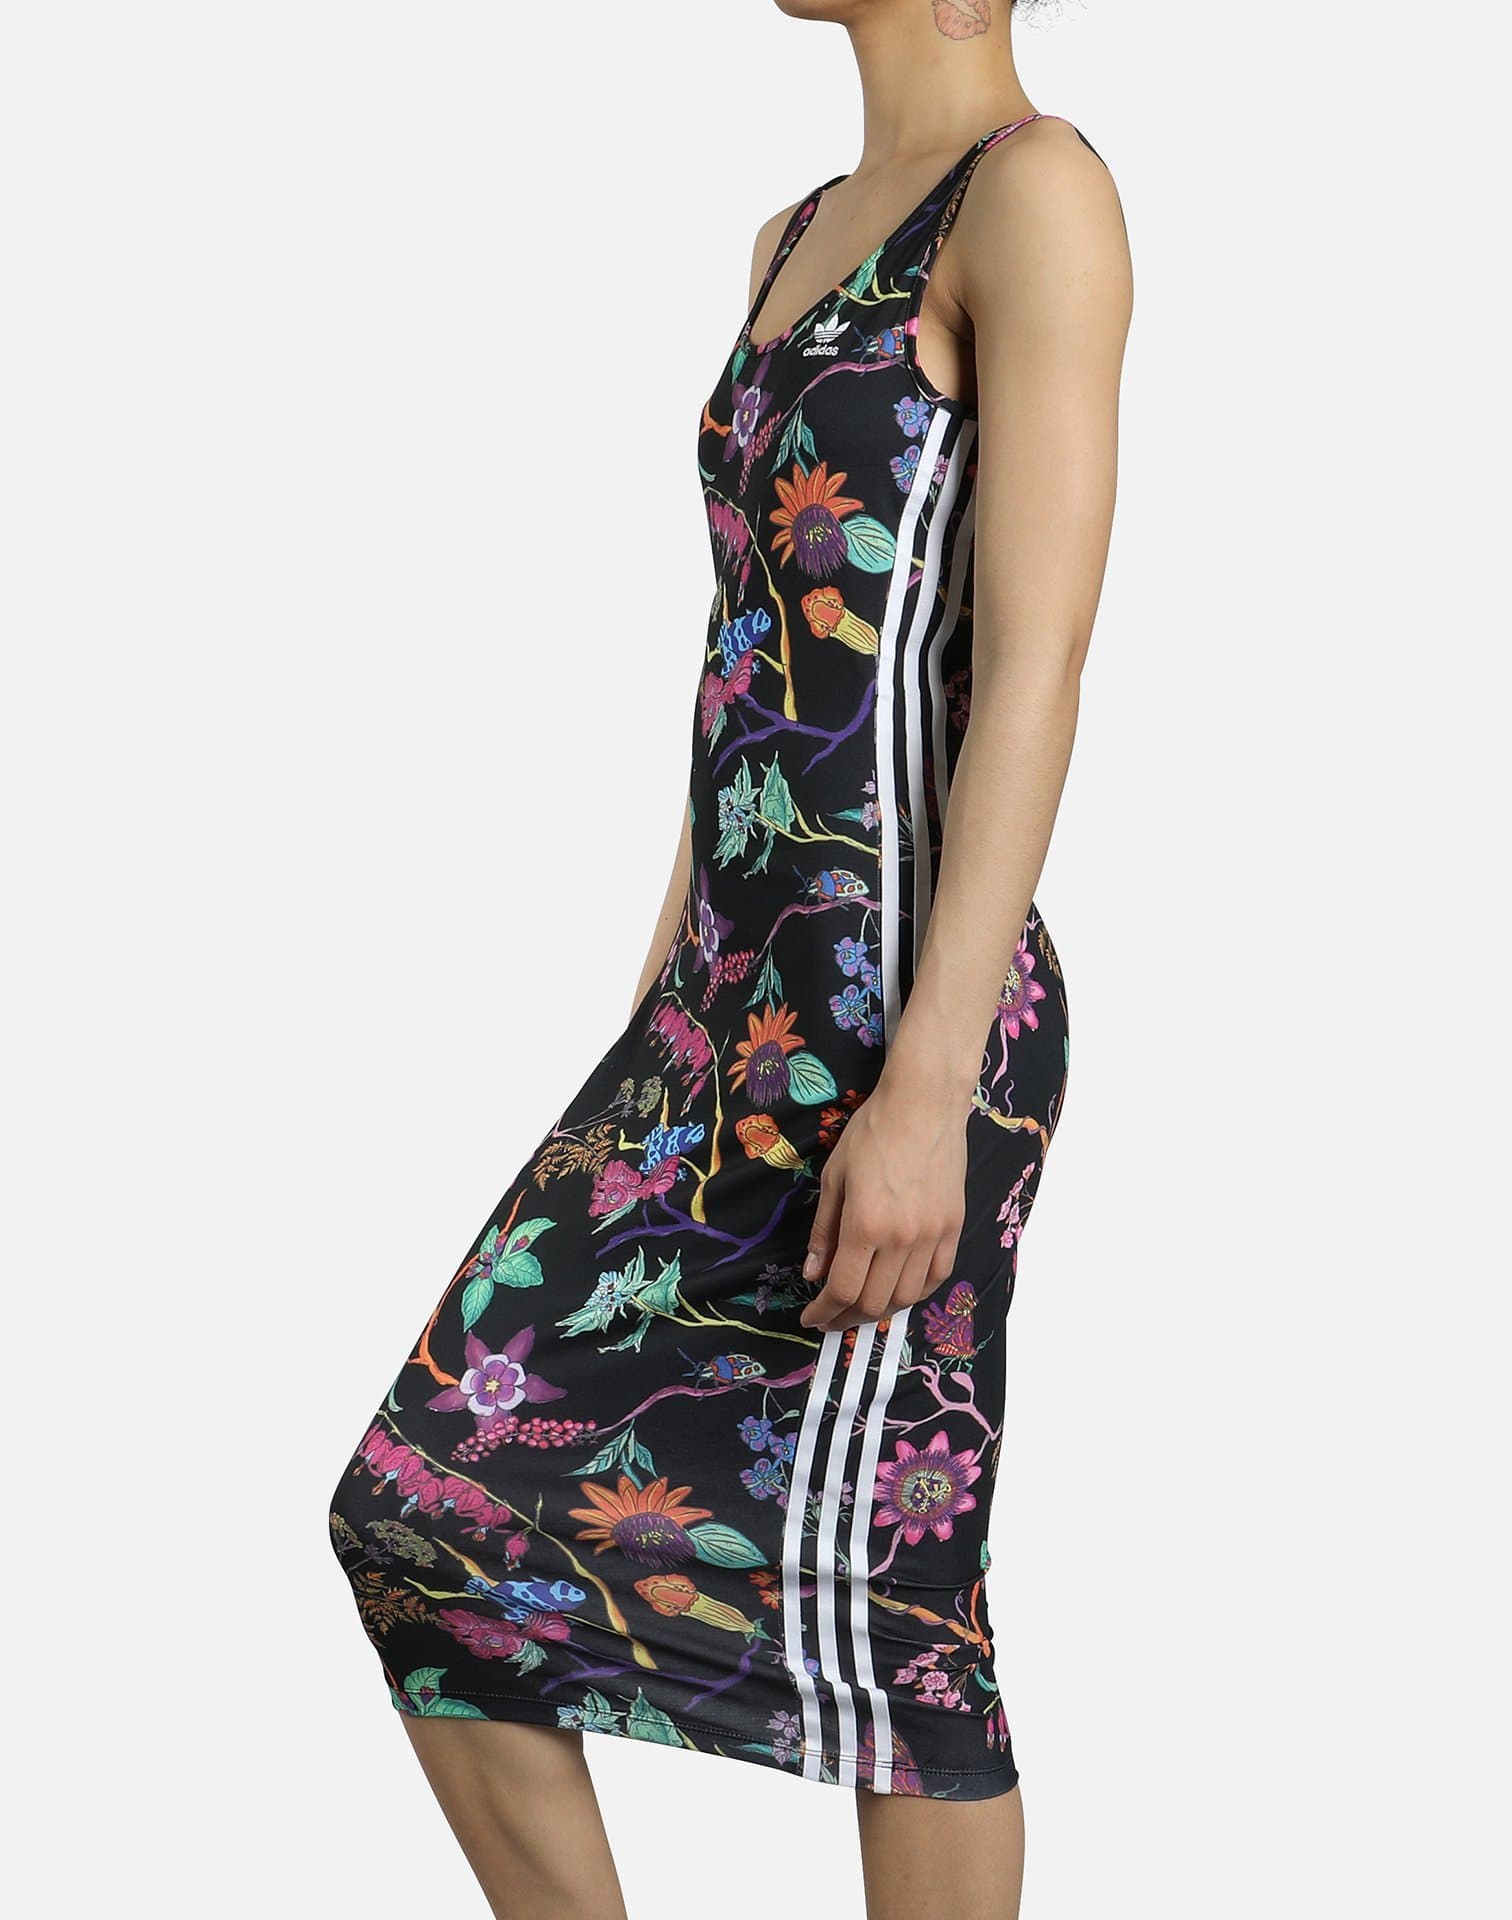 adidas Originals Women's Poisonous Garden Slim Tank Dress